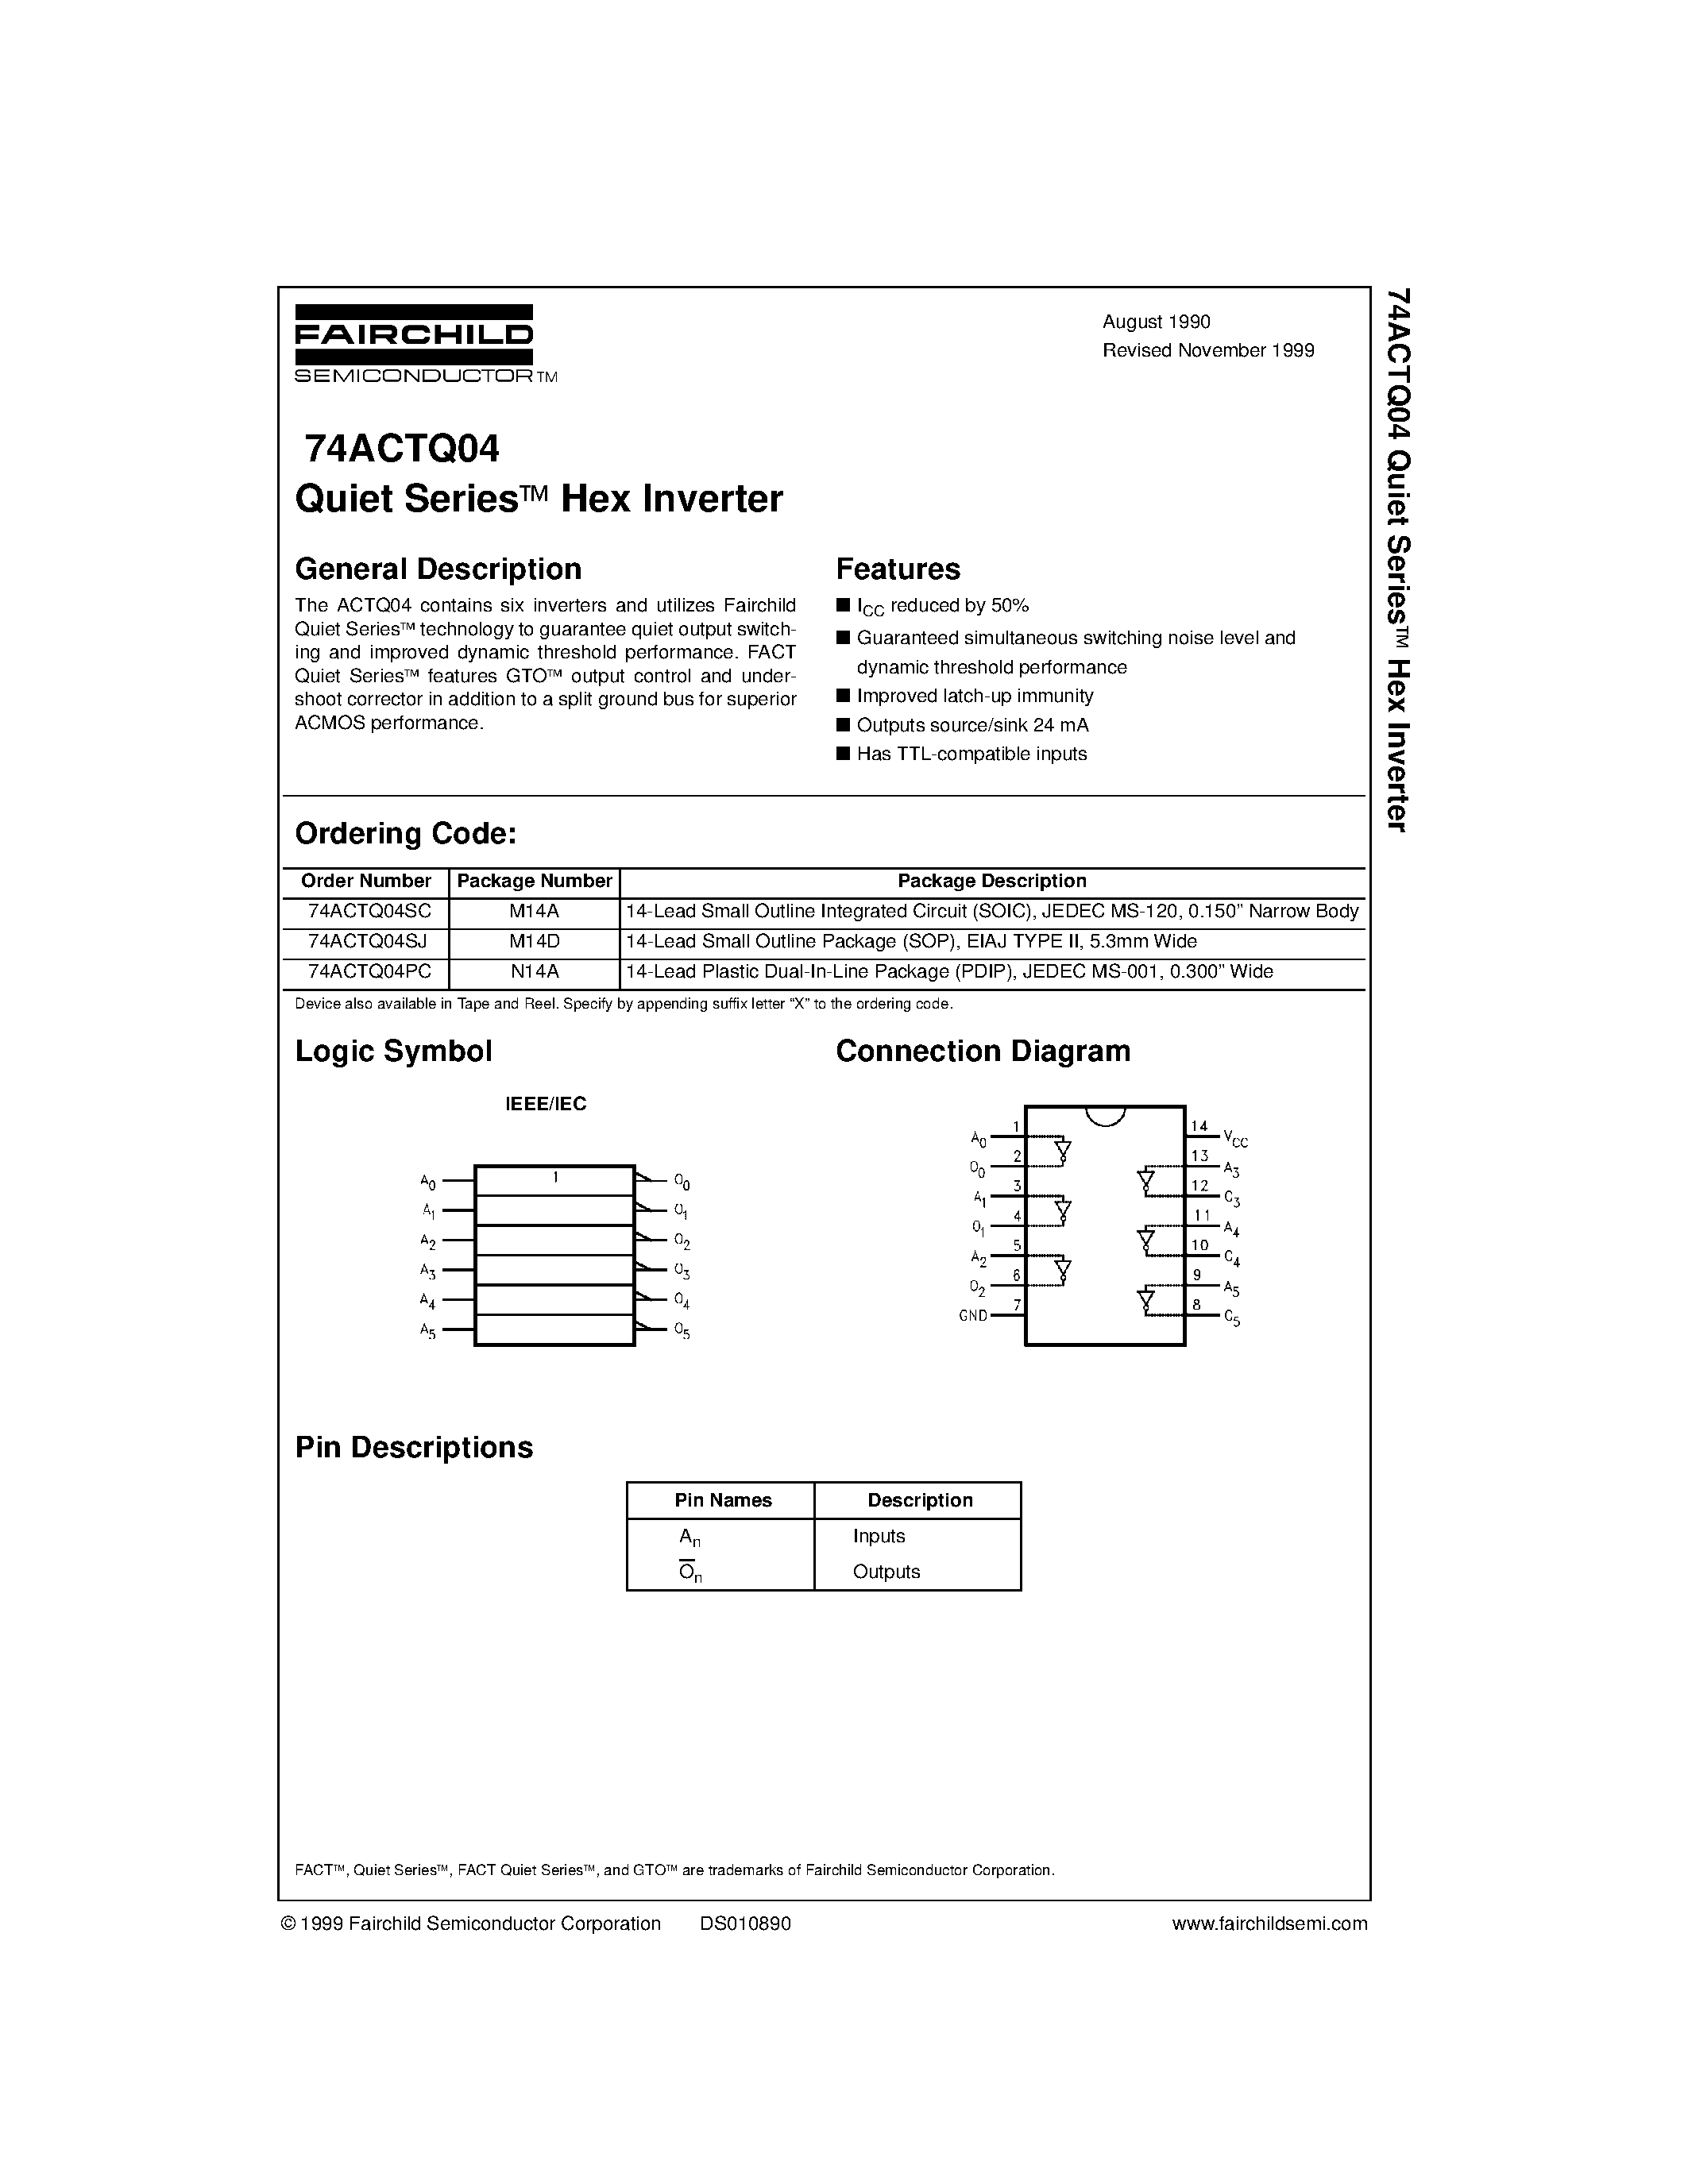 Datasheet 74ACTQ04SJ - Quiet Series Hex Inverter page 1